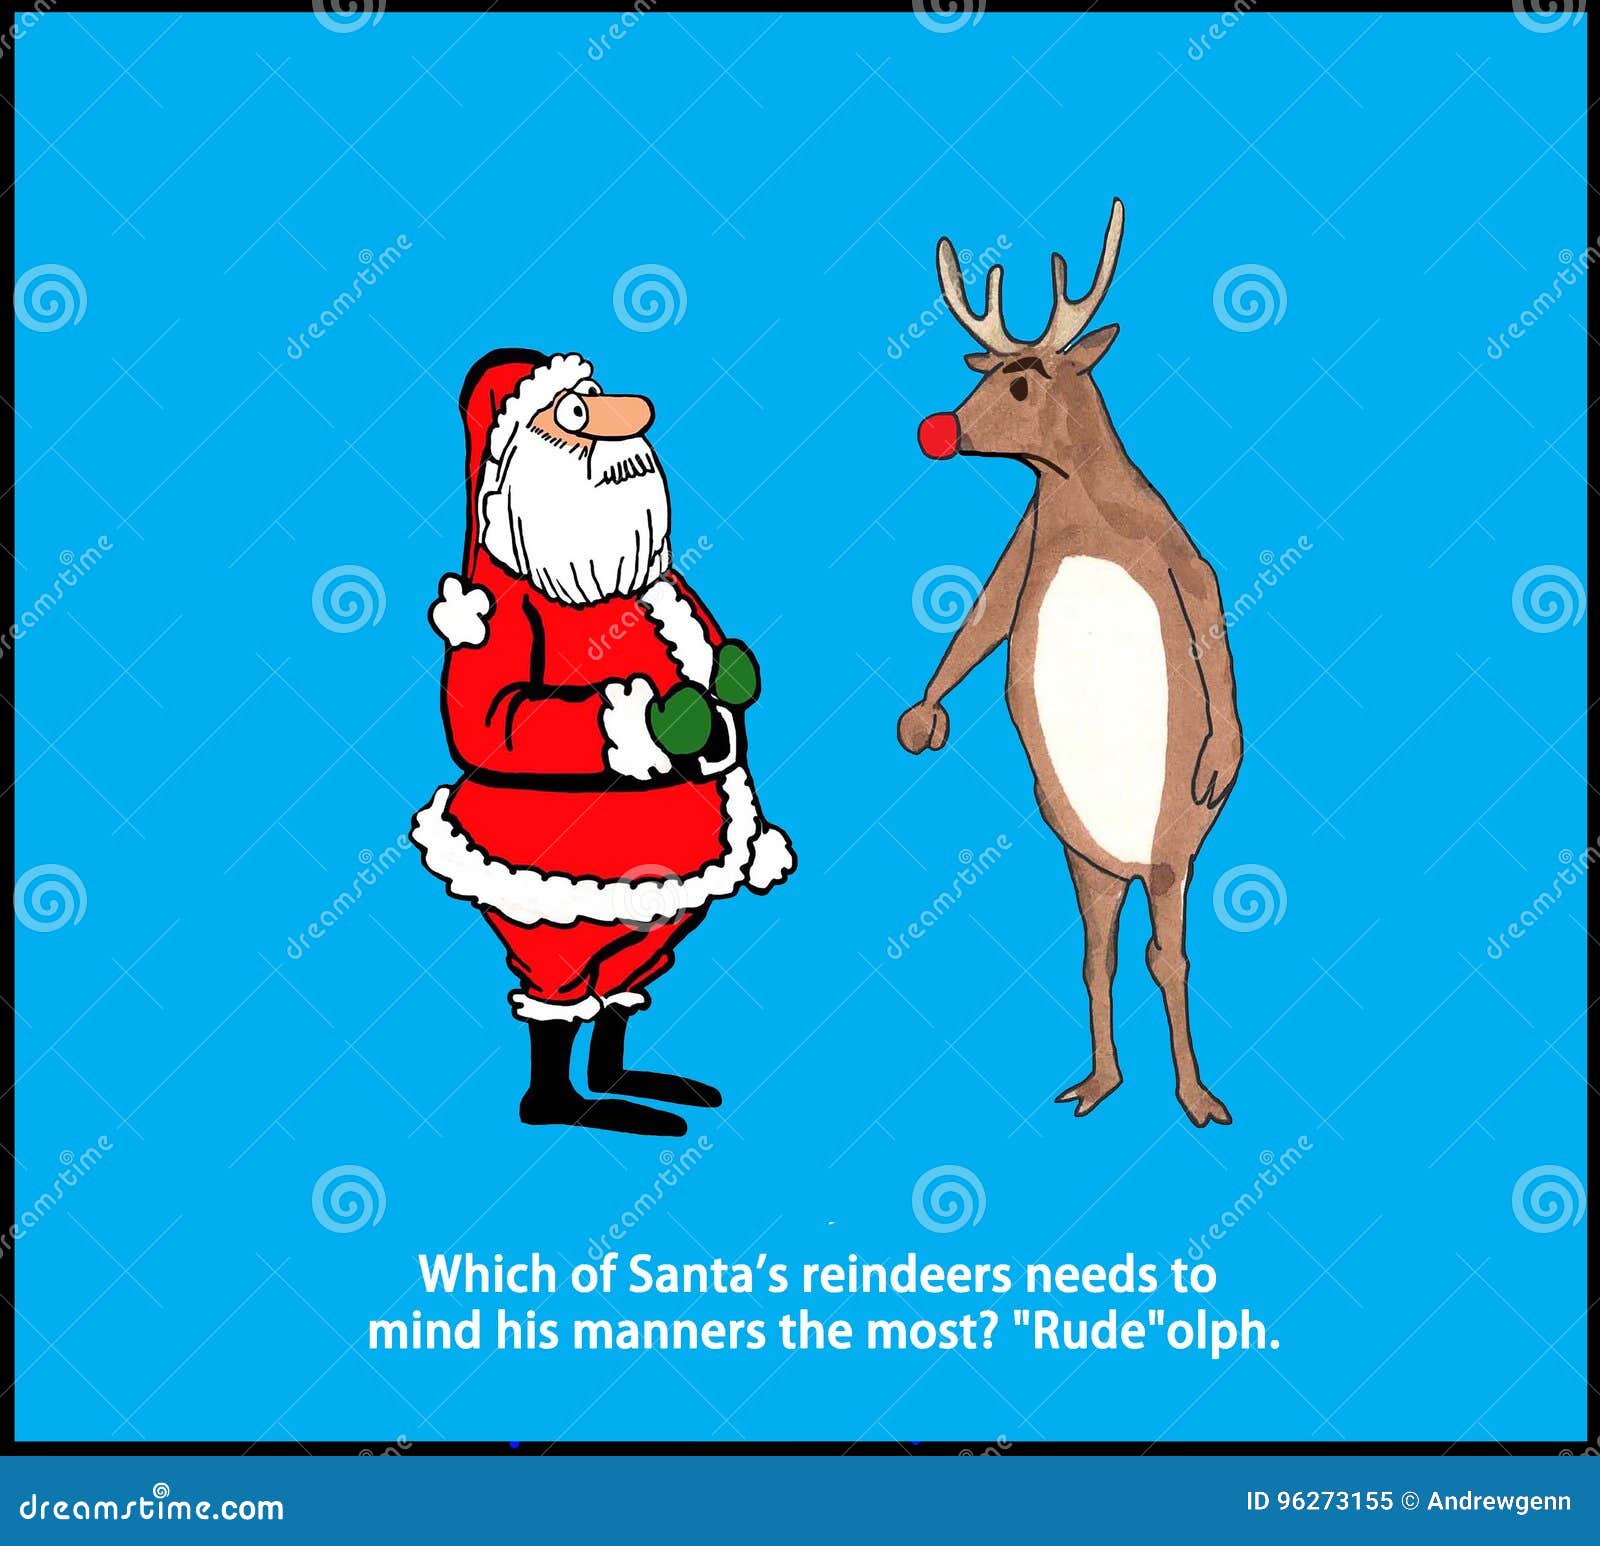 Rude`olph stock illustration. Illustration of reindeer - 96273155